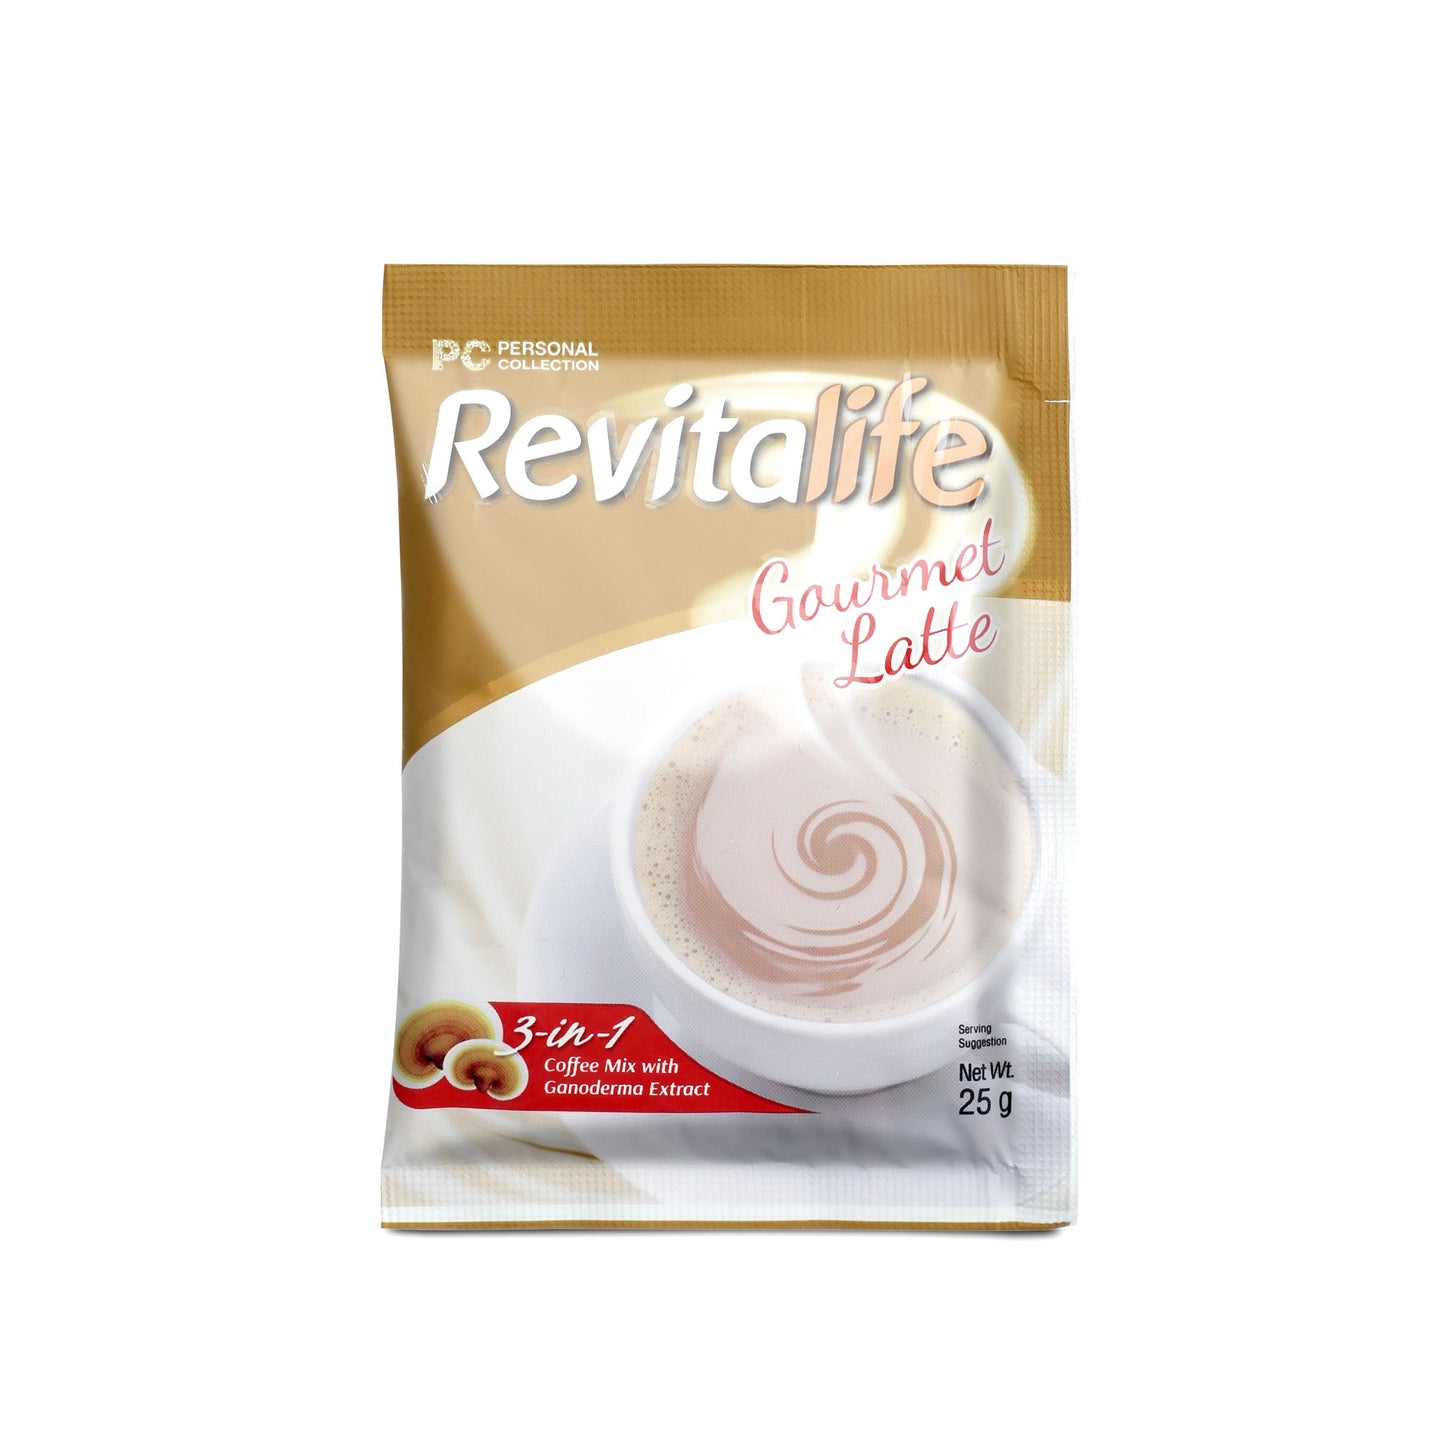 Revitalife Gourmet Latte 20g x 20 sachets/pouch